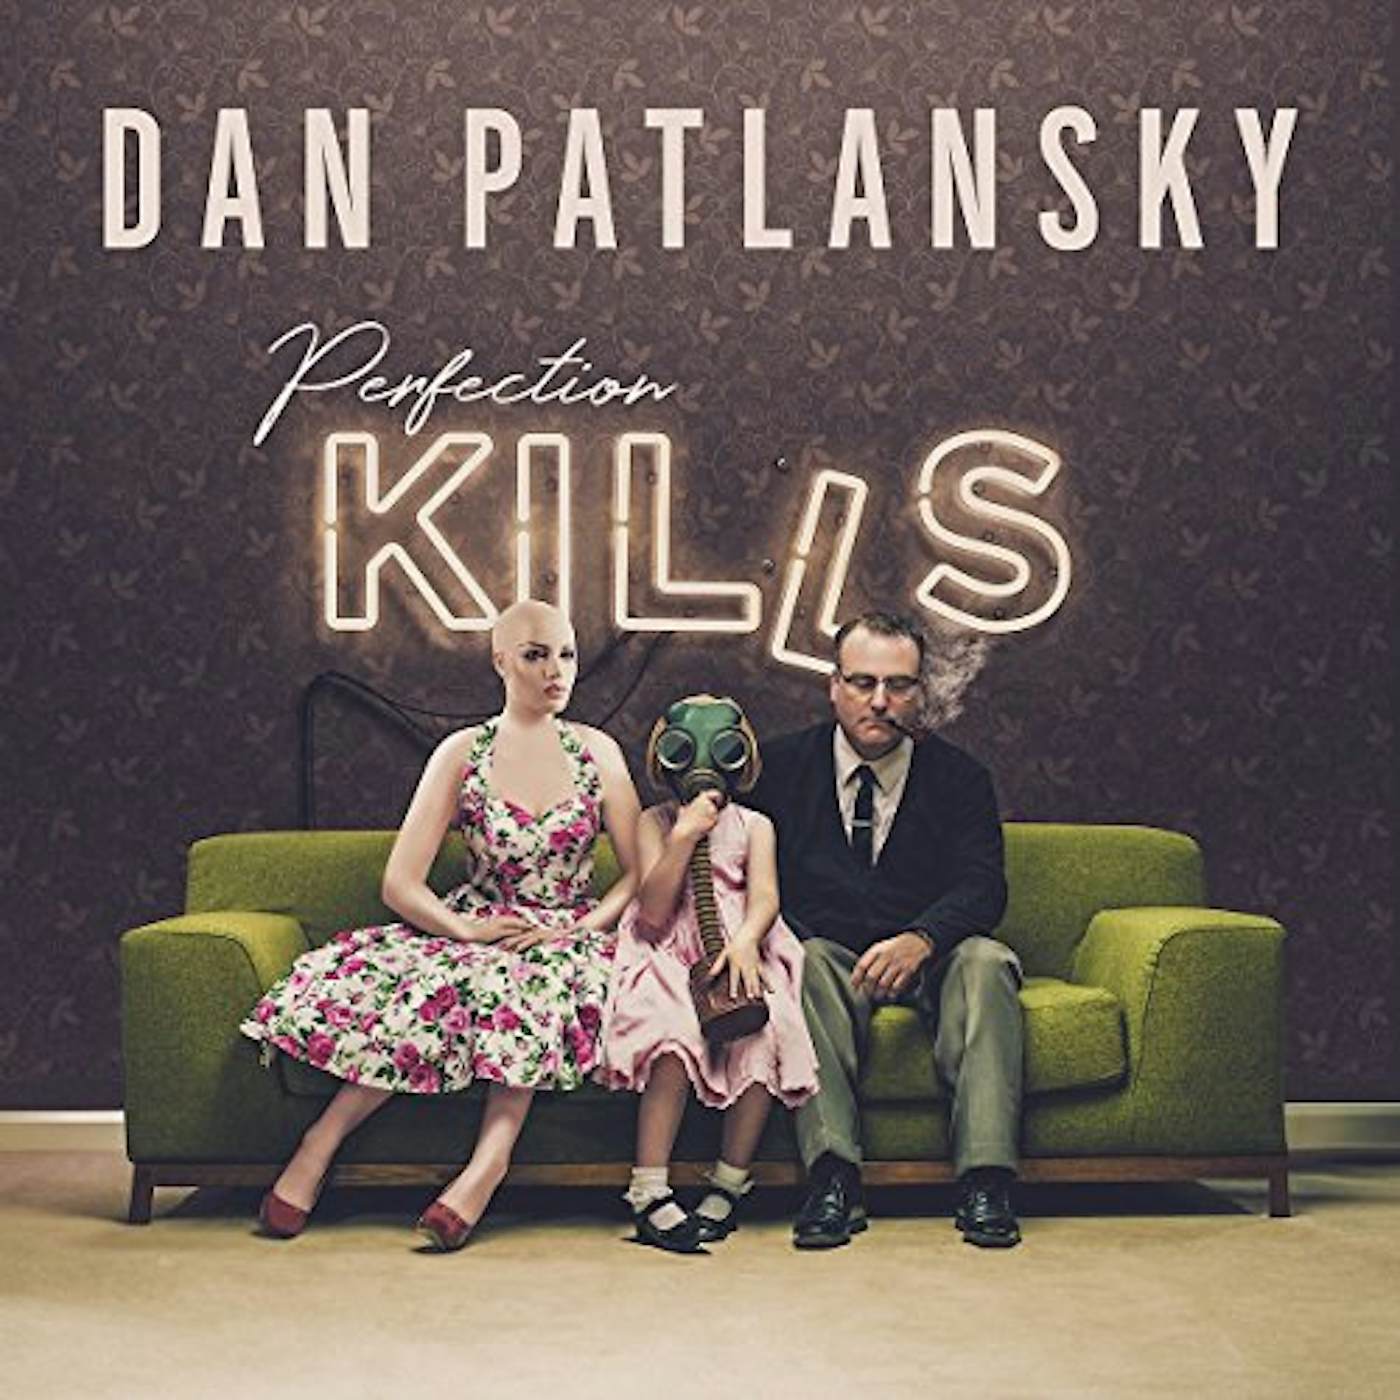 Dan Patlansky Perfection Kills Vinyl Record